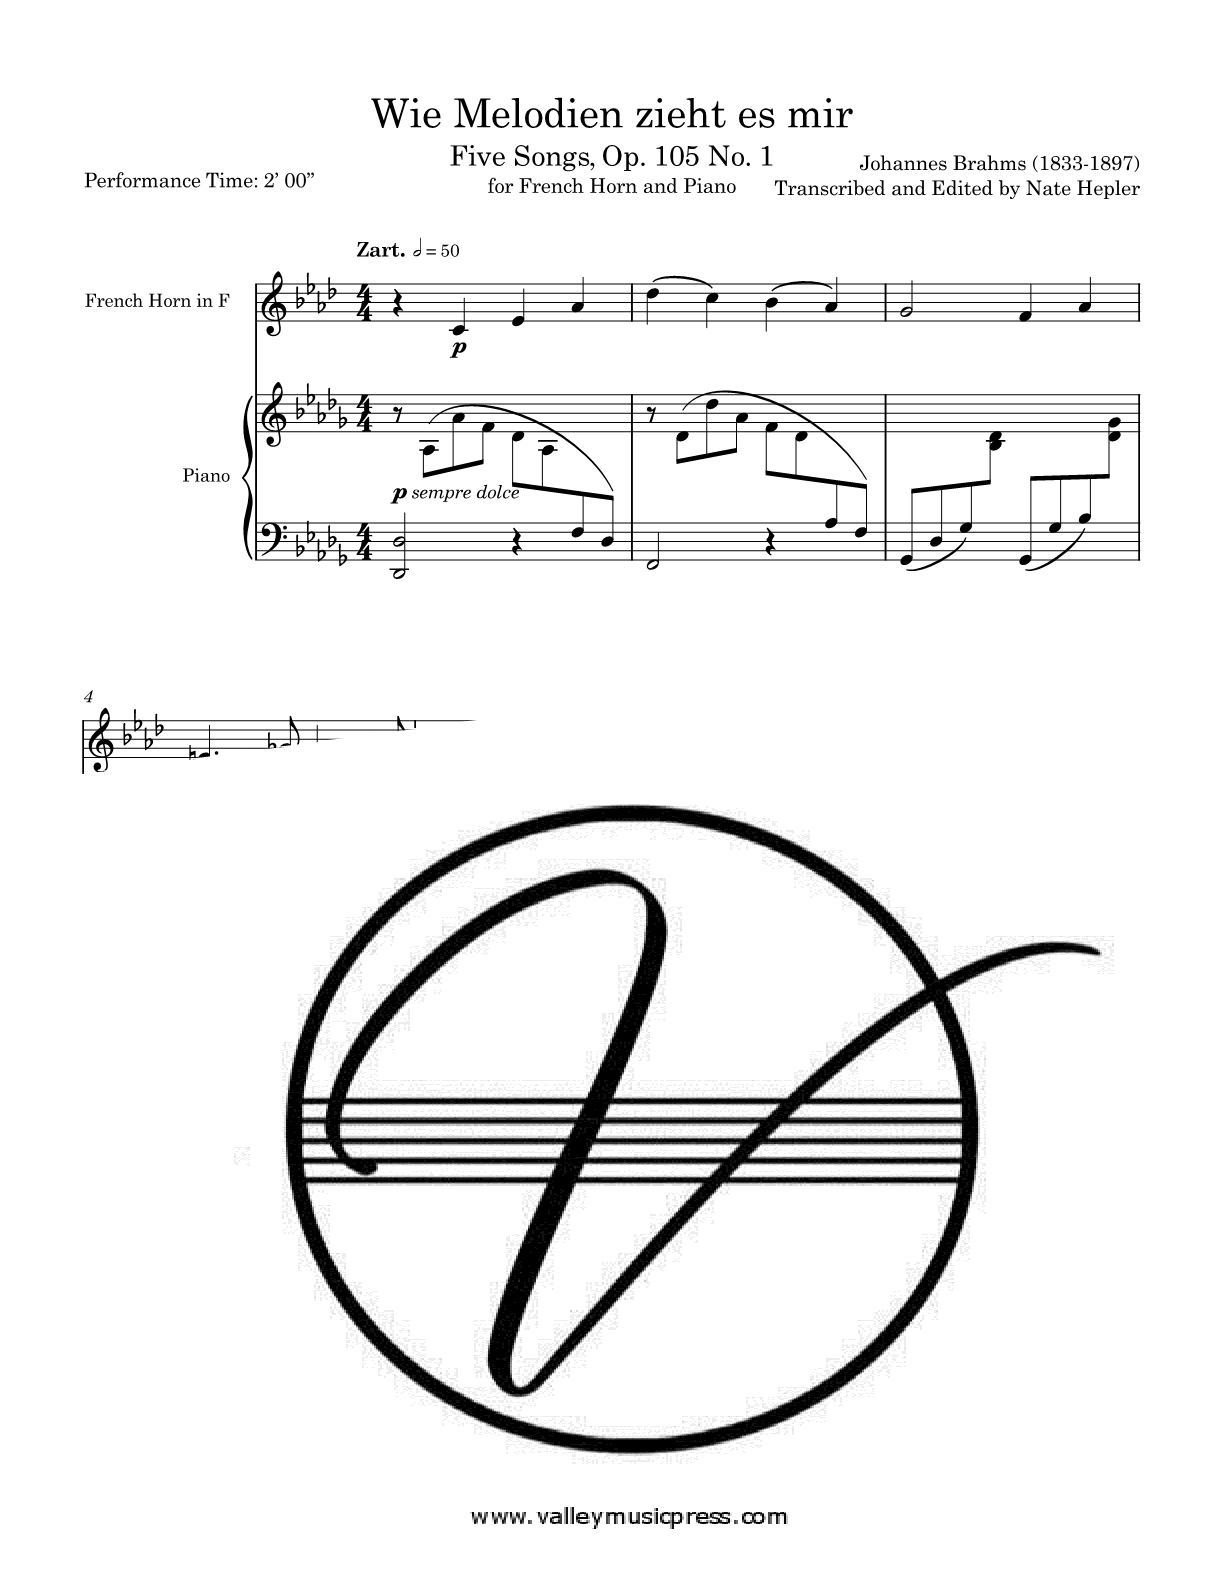 Brahms - Wie Melodien zieht es mir Five Songs Op. 105(Hrn & Pno) - Click Image to Close